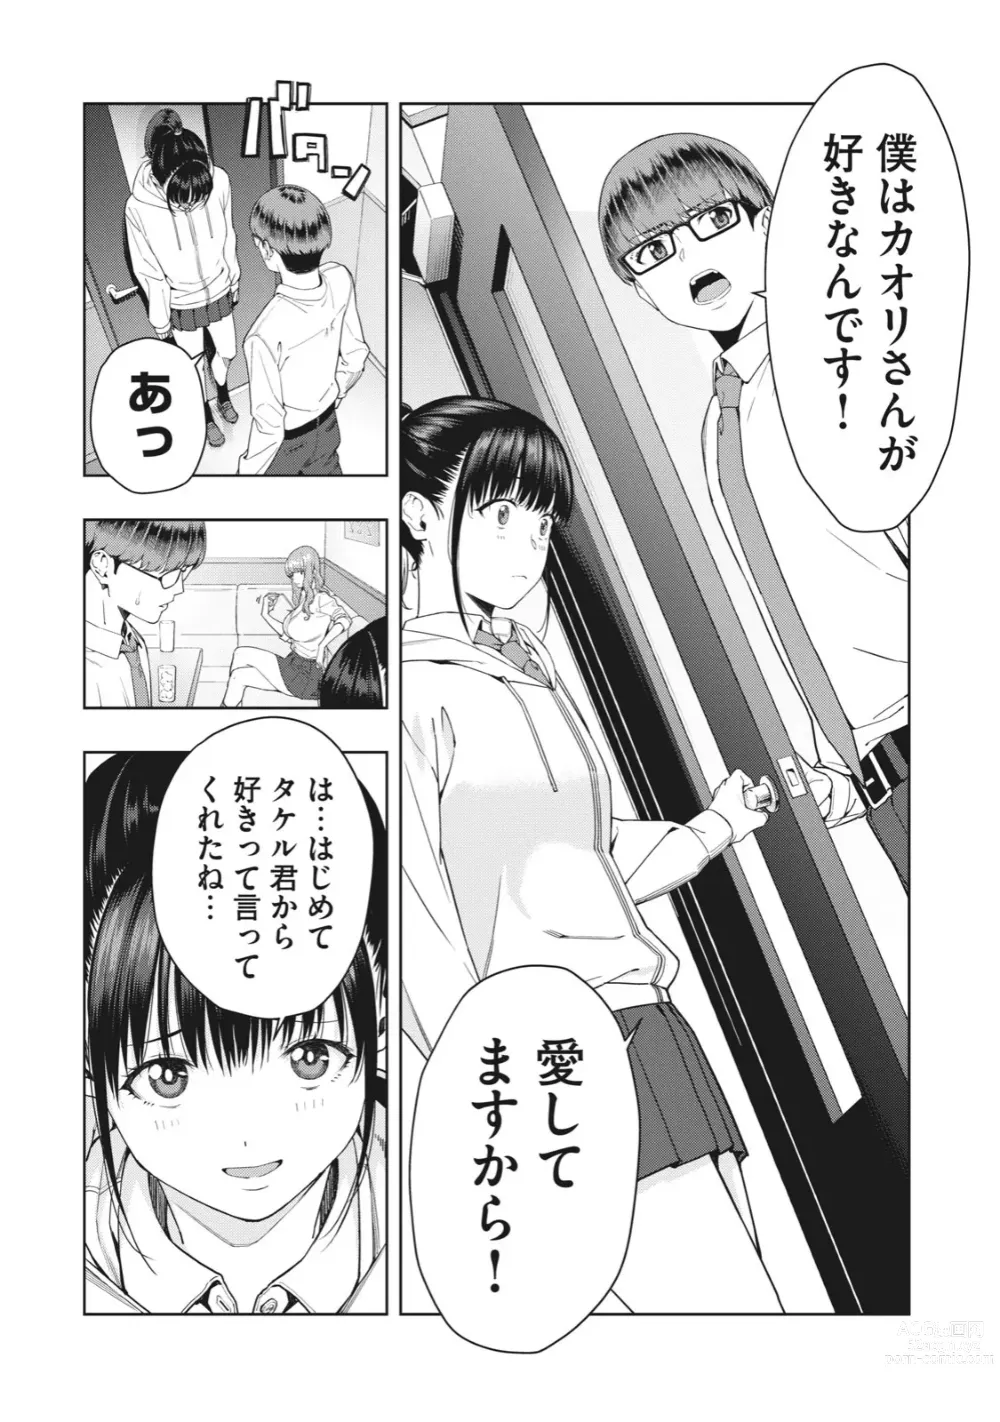 Page 15 of manga Kanojo no Tomodachi